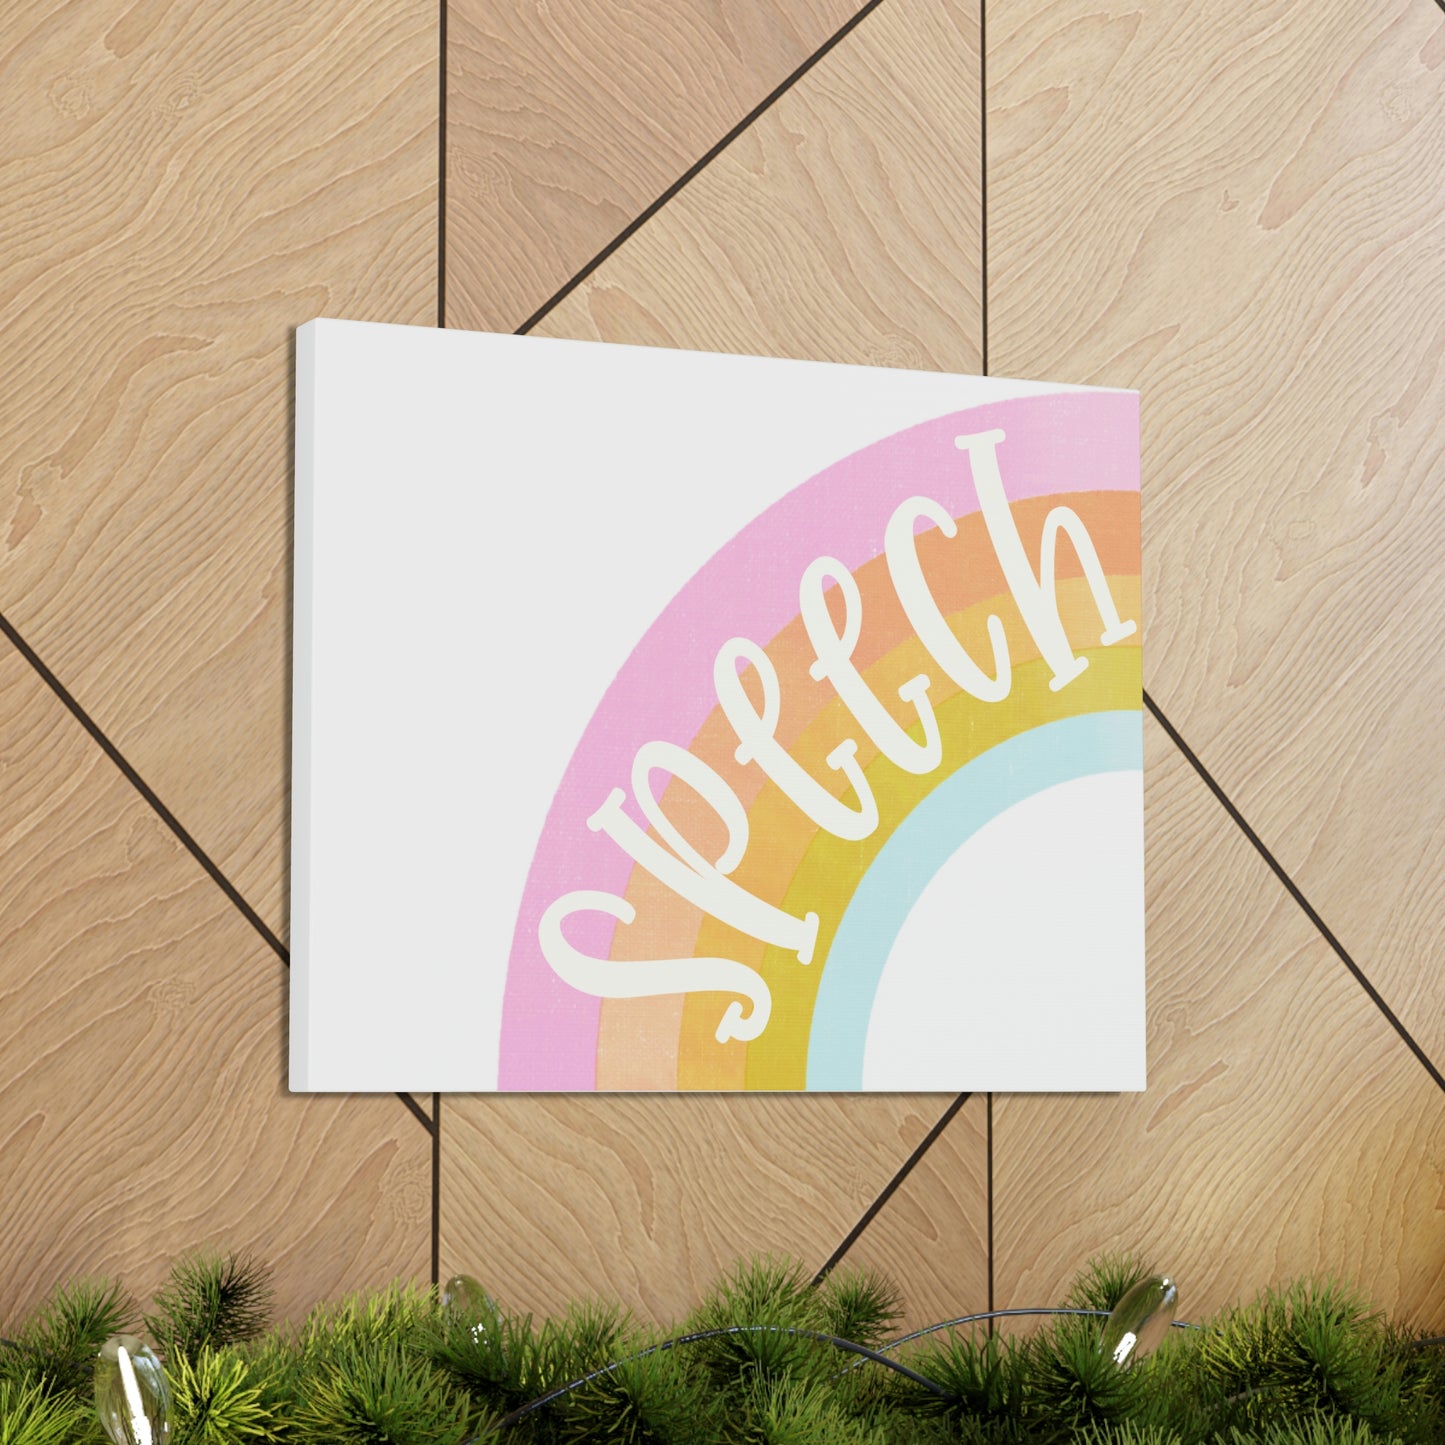 Speech Bright Rainbow Canvas Print (20 x 16 in)